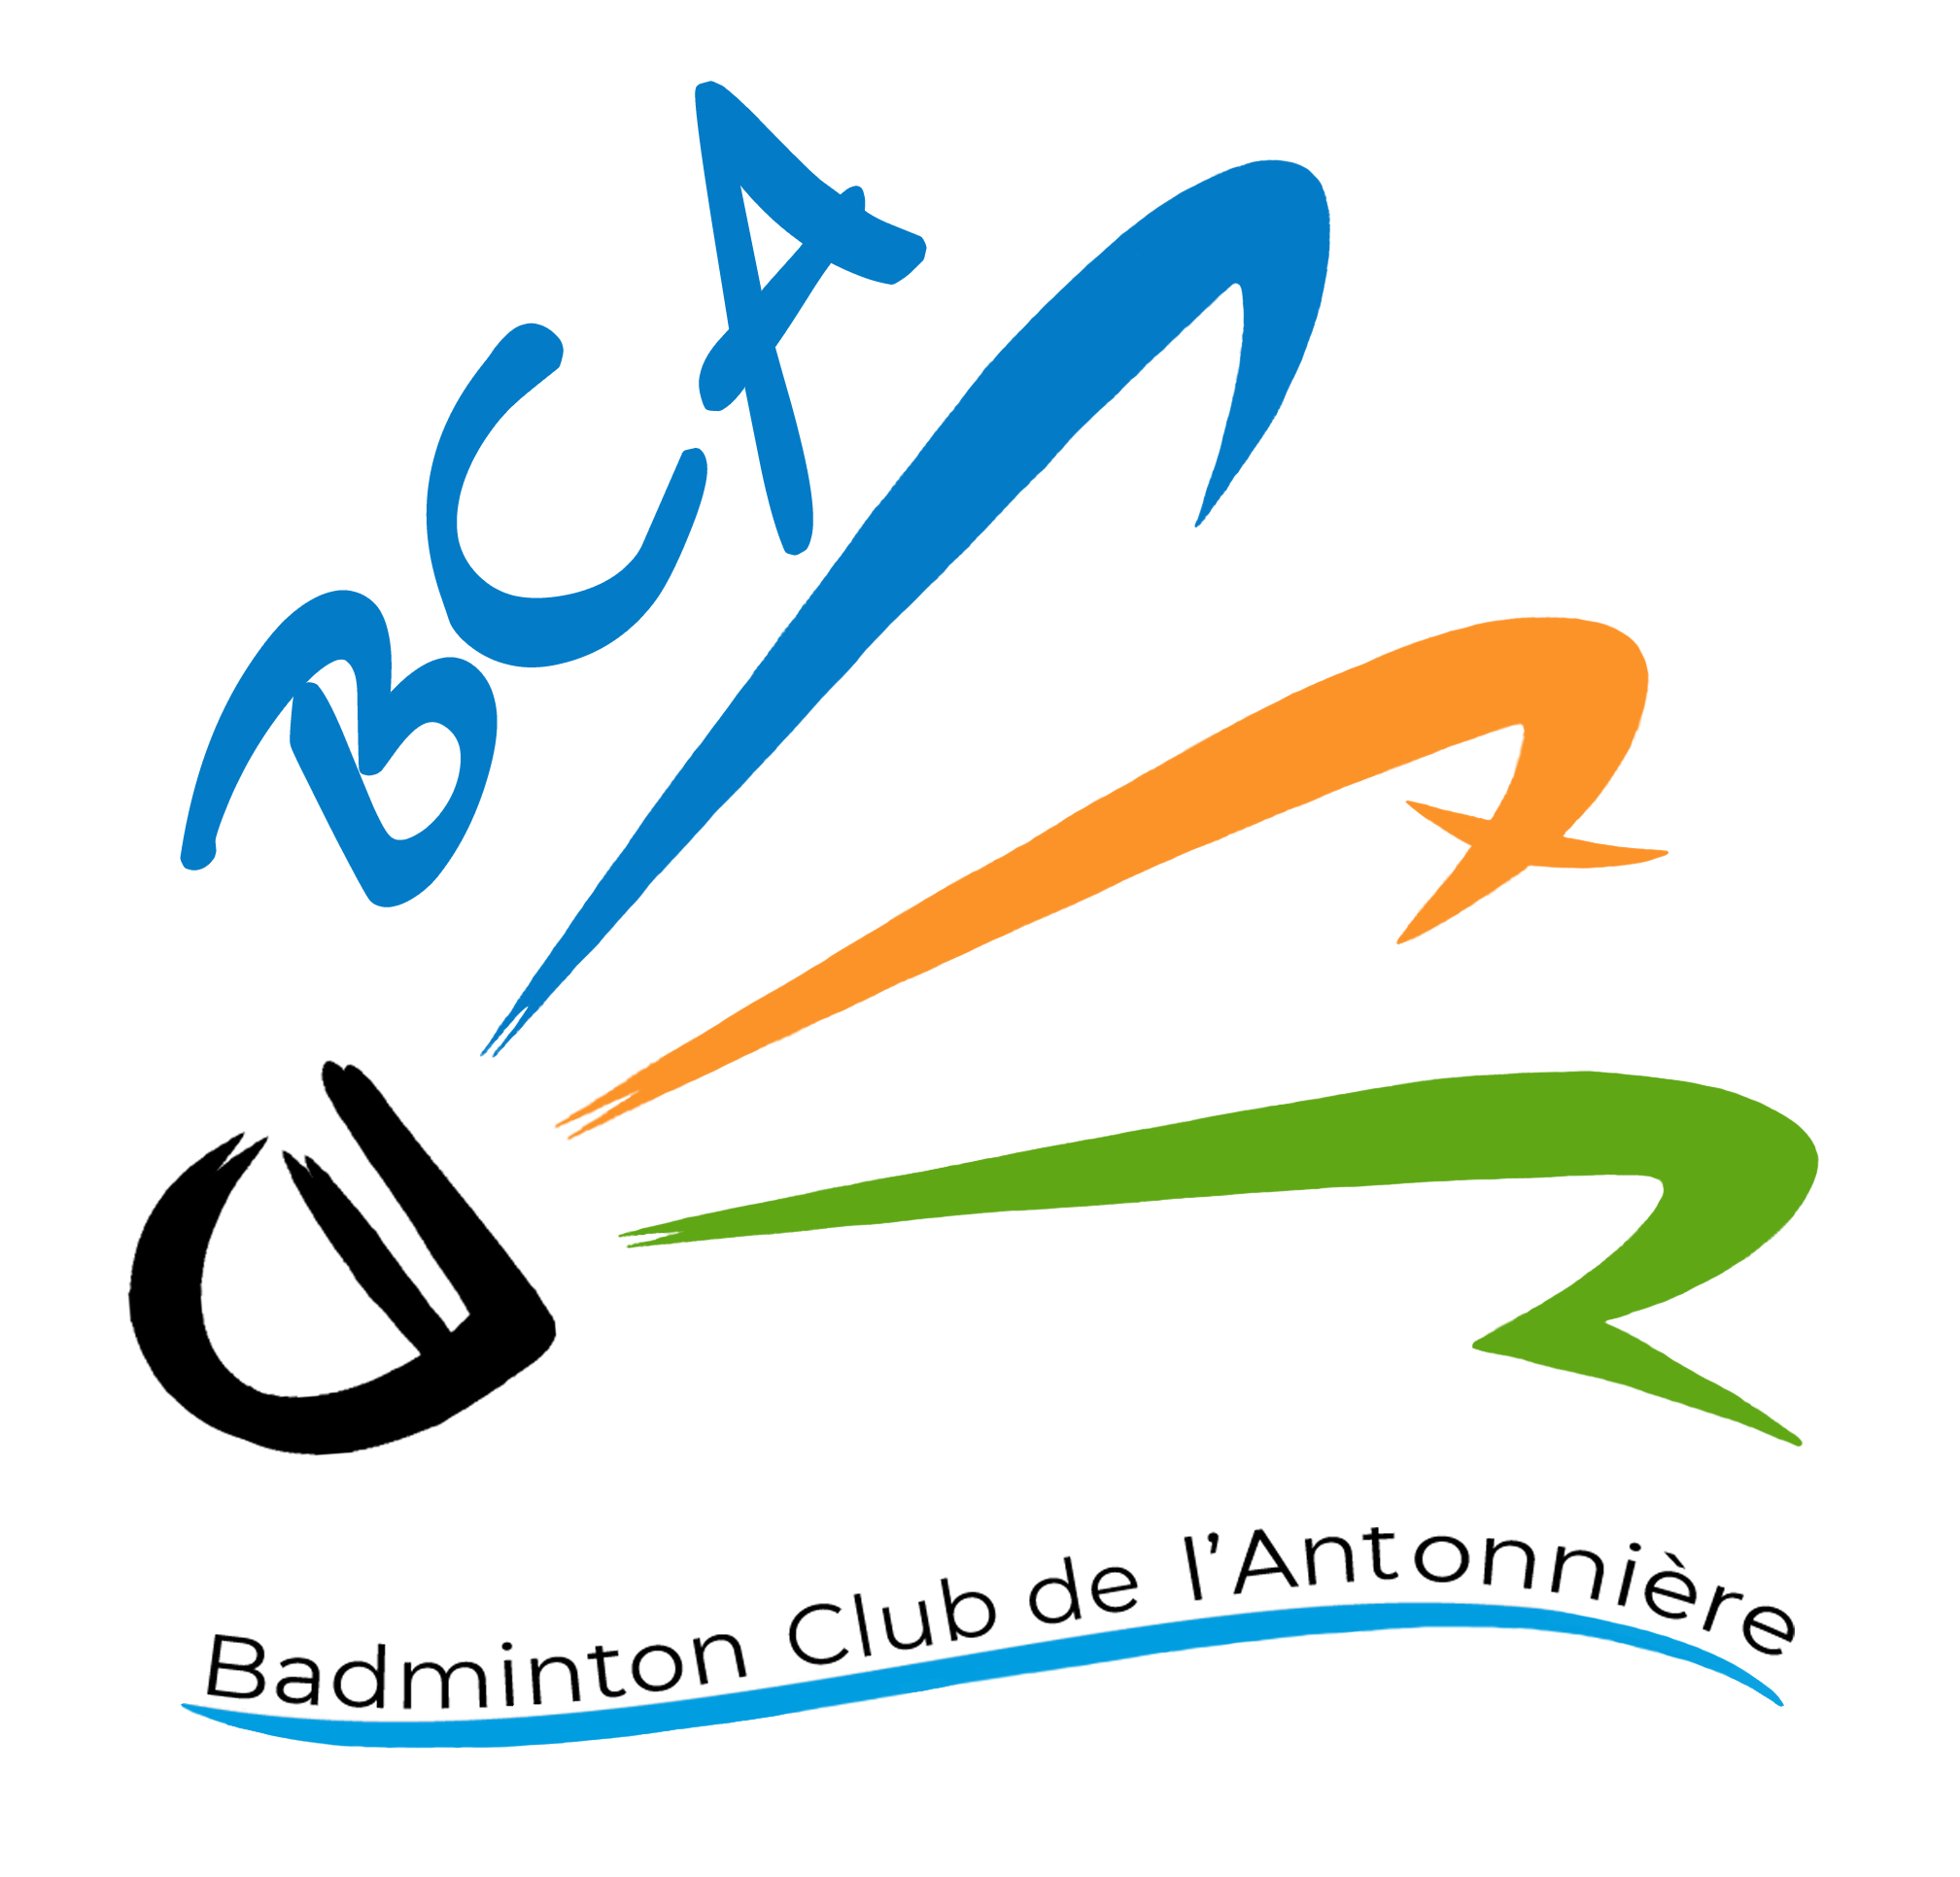 https://bca72.fr/wp-content/uploads/2020/08/logo_bca72_2020_transparent.png